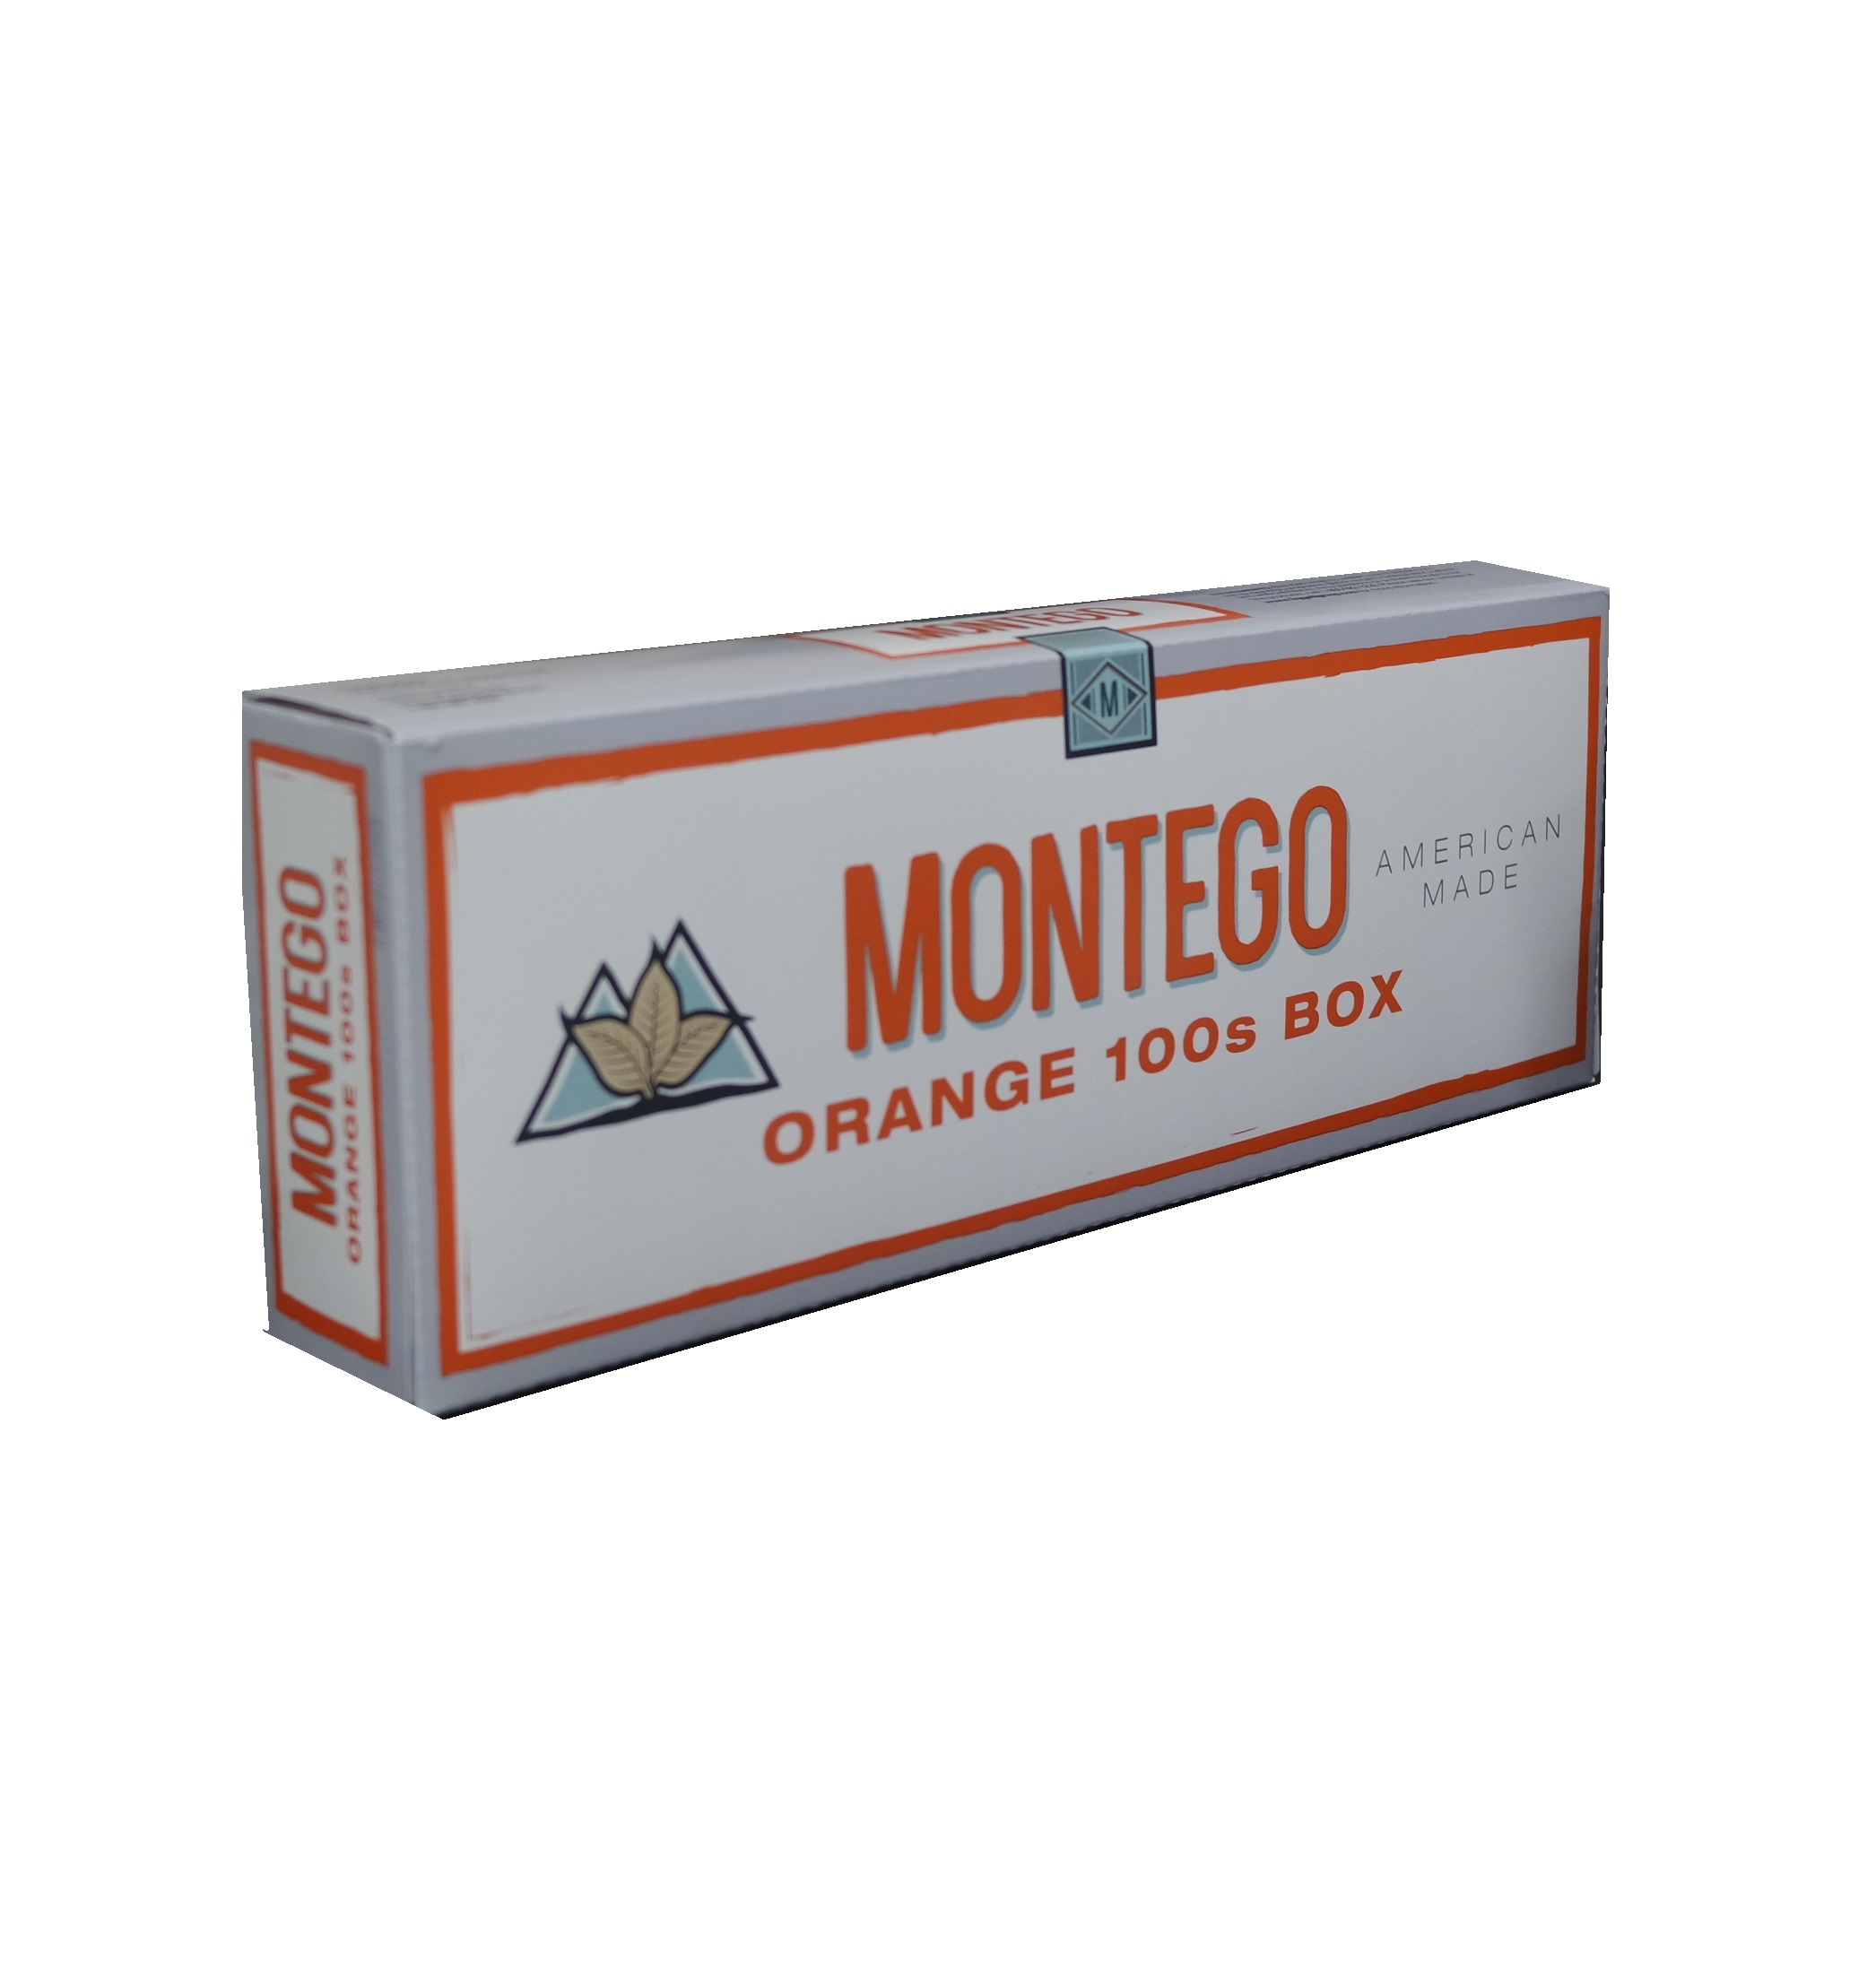 Montego orange 100s box